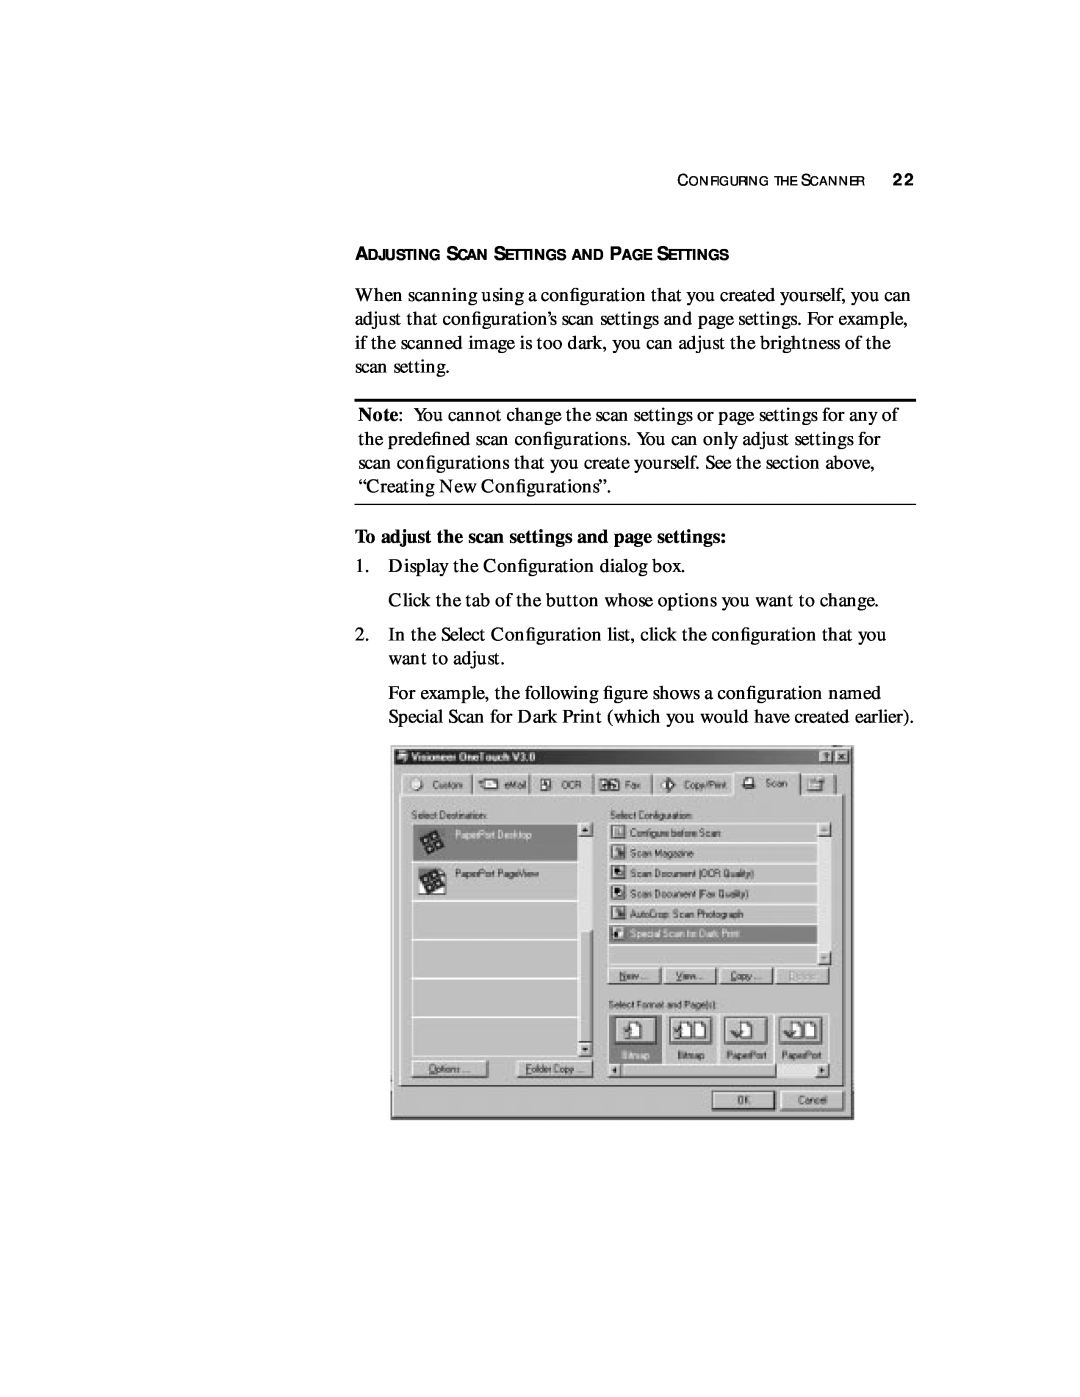 Visioneer 8900 manual Adjusting Scan Settings And Page Settings, To adjust the scan settings and page settings 